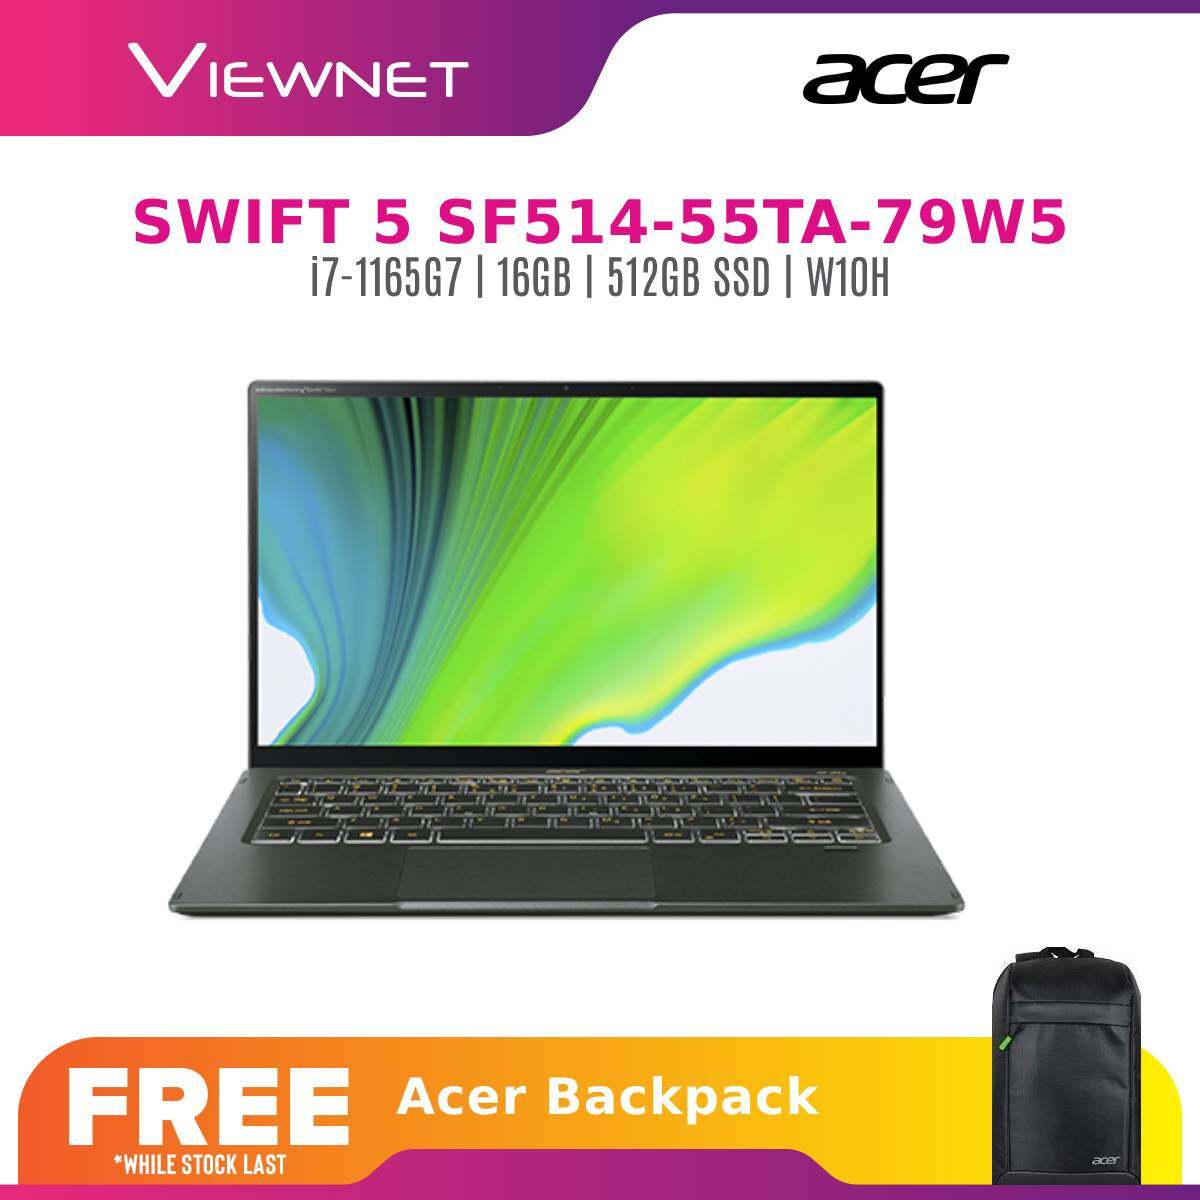 ACER SWIFT 5 SF514-55TA-79W5 LAPTOP (I7-1165G7,16GB,512GB SSD,14